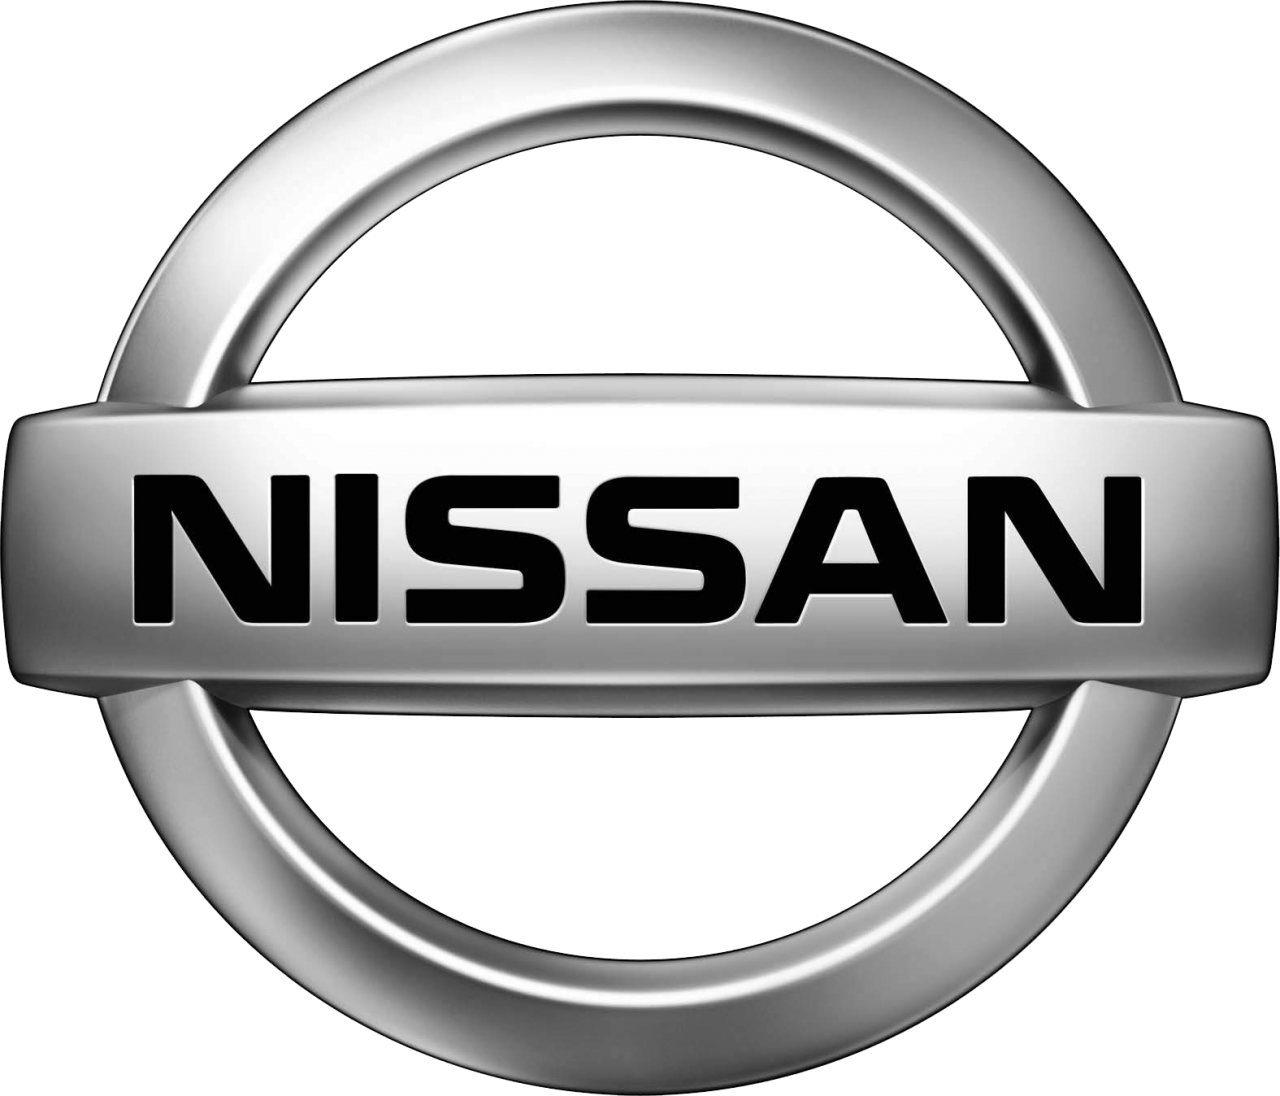 Nissan Car Logo PNG Image PurePNG Free transparent CC0 PNG Image